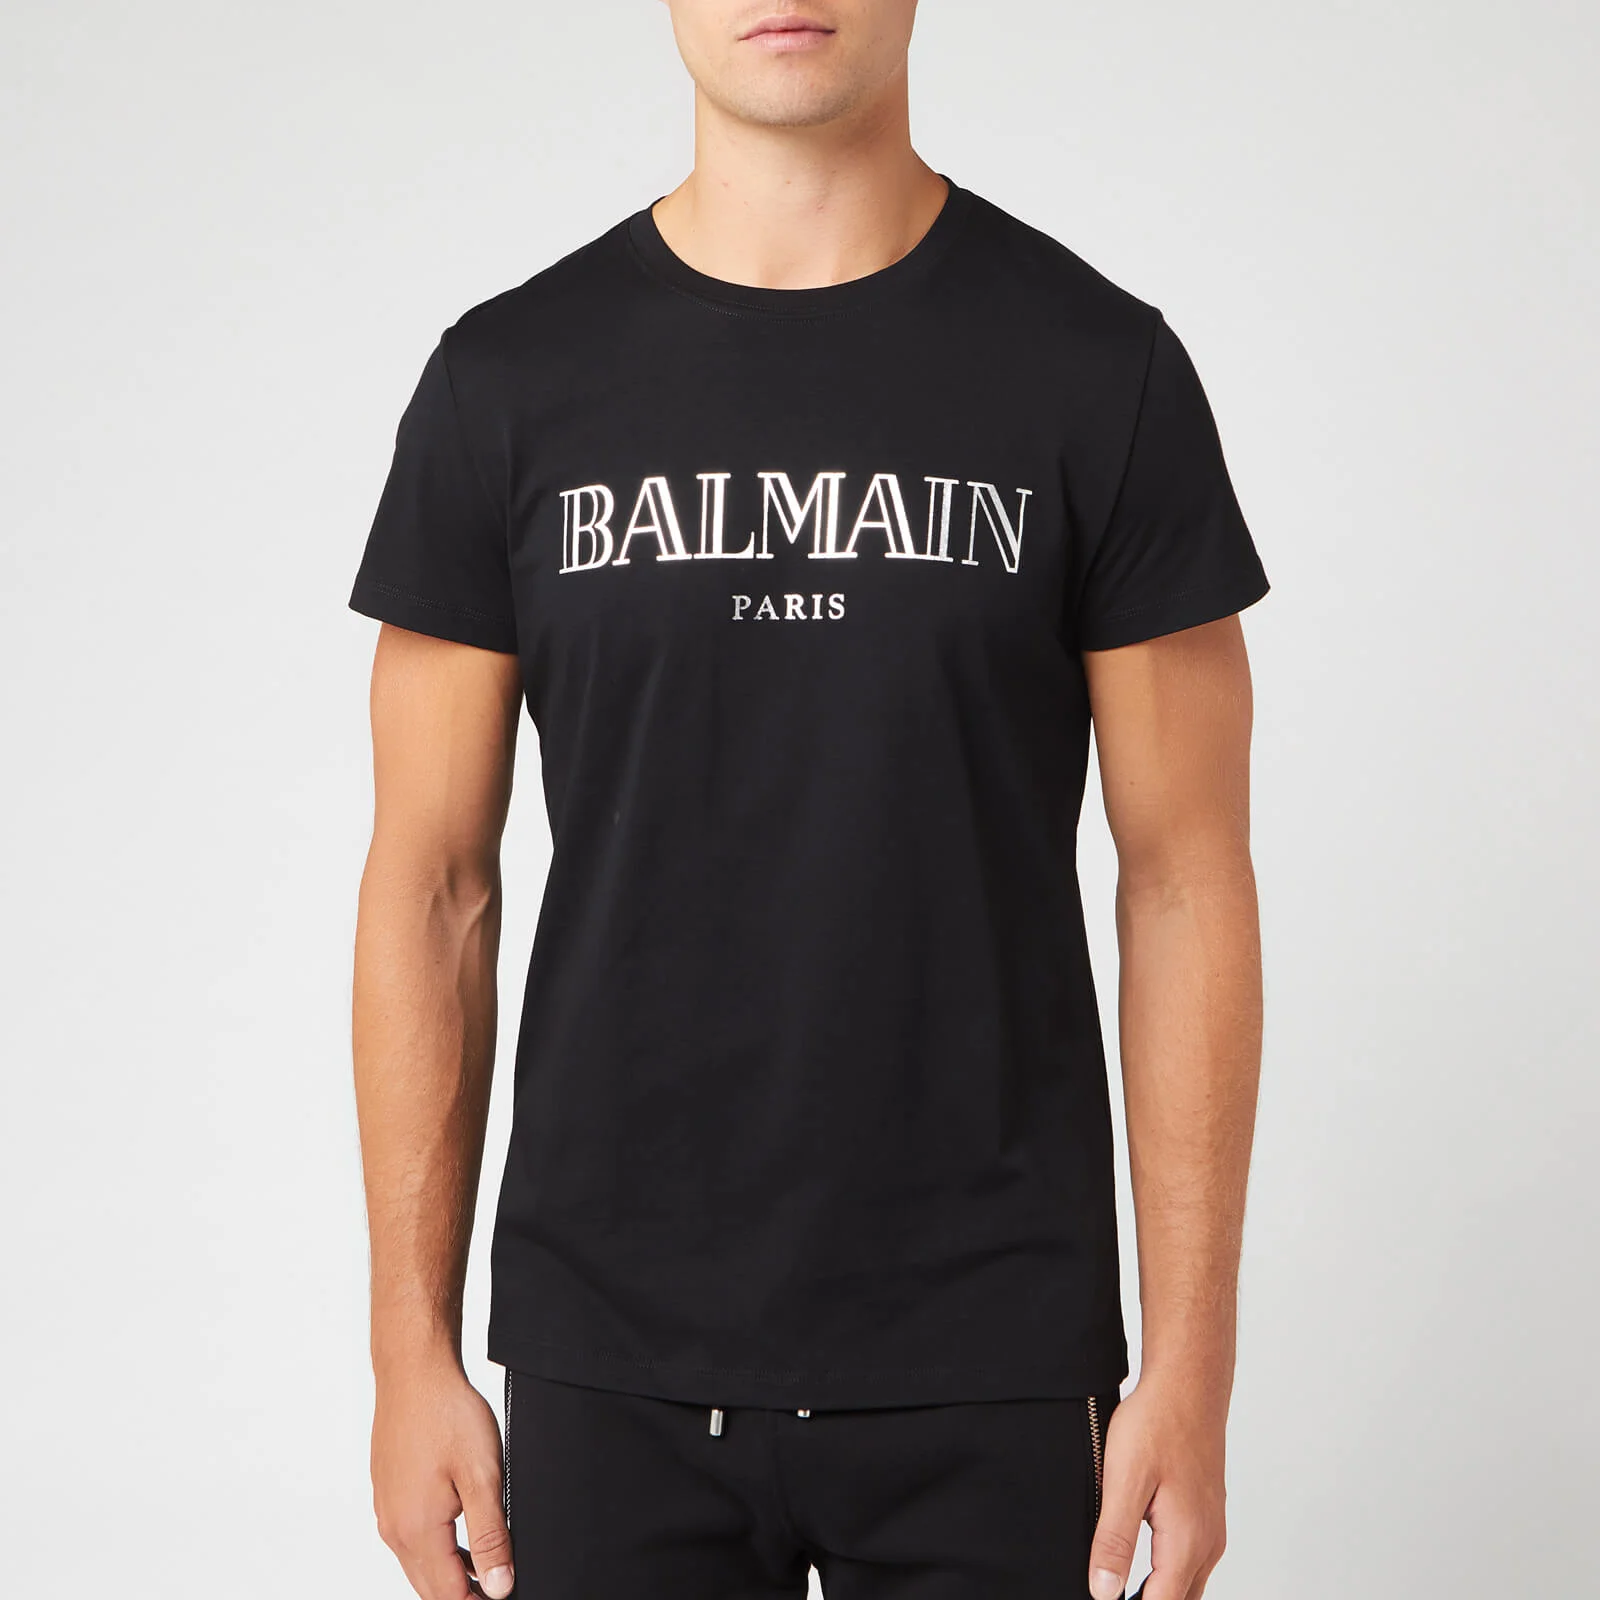 Balmain Men's Paris Silver Logo T-Shirt - Noir Image 1